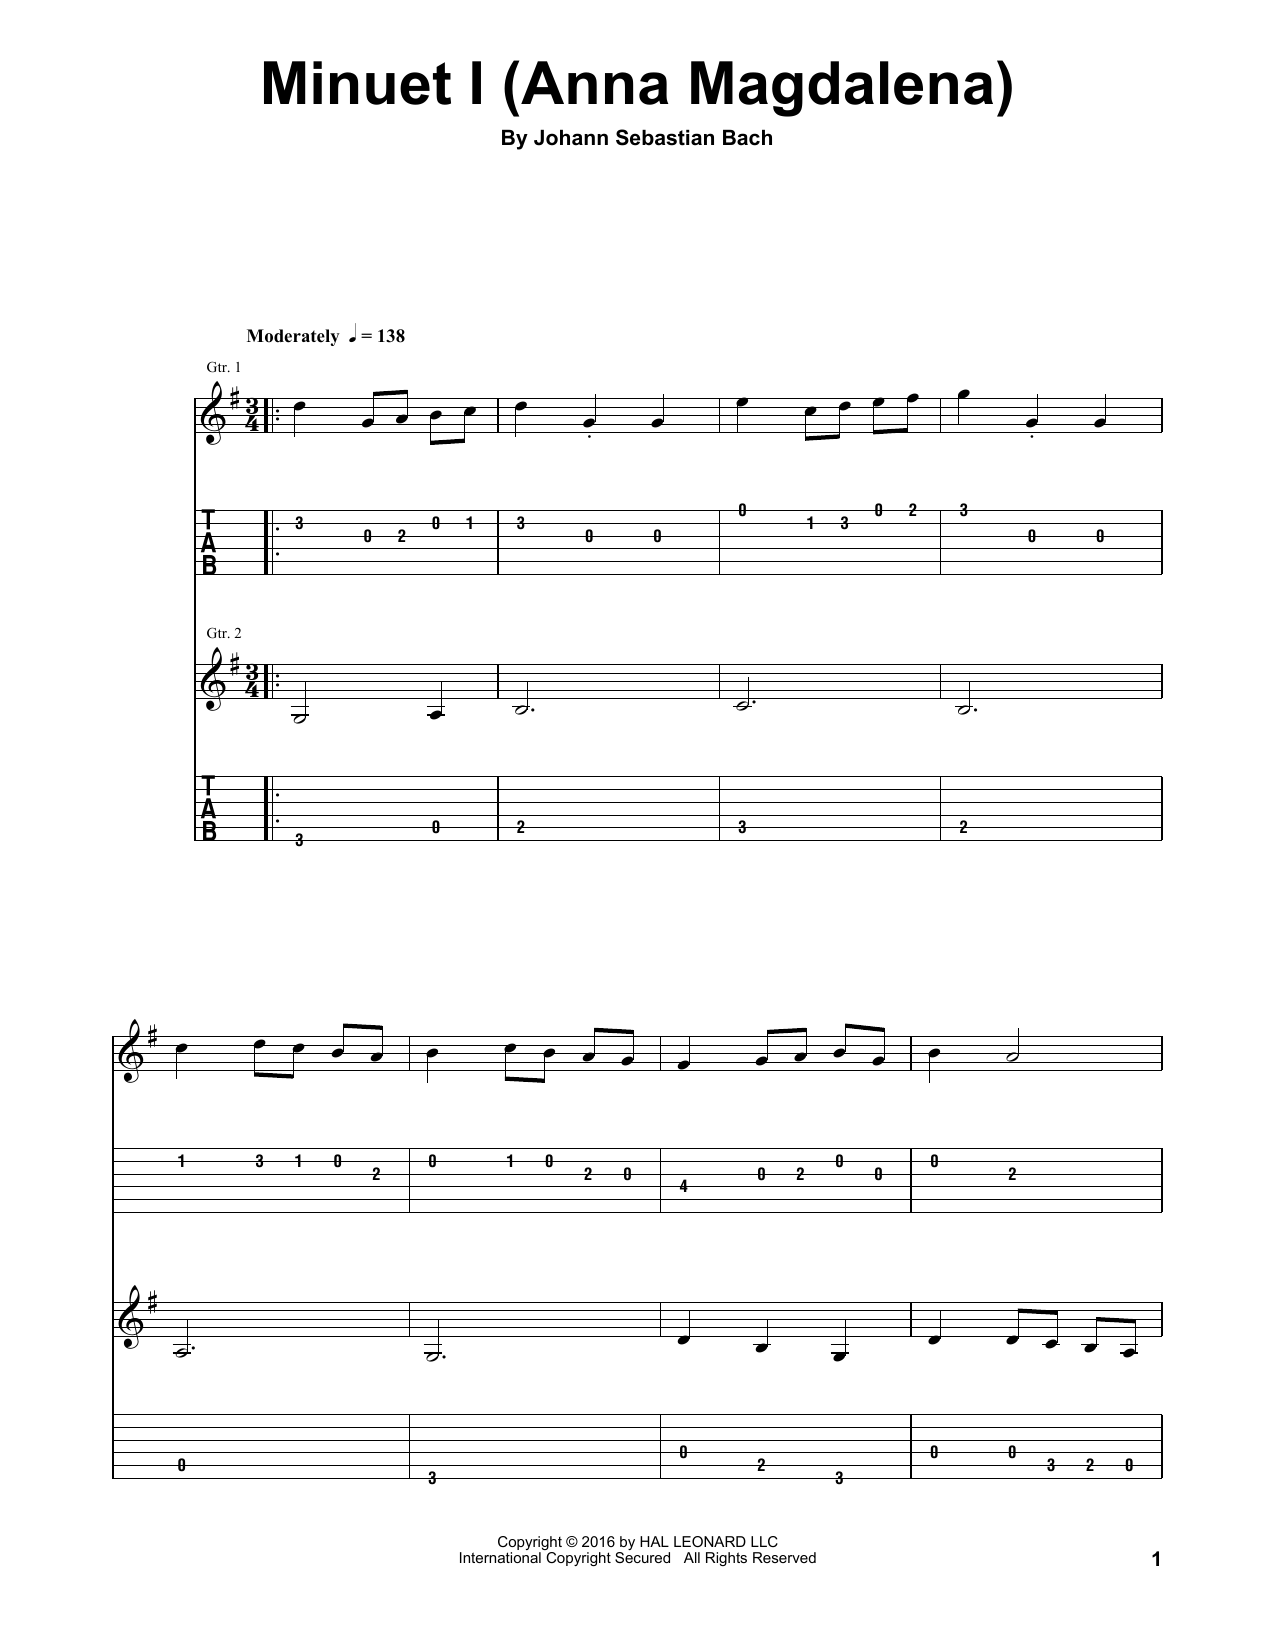 Download Johann Sebastian Bach Minuet I (Anna Magdalena) Sheet Music and learn how to play Guitar Tab Play-Along PDF digital score in minutes